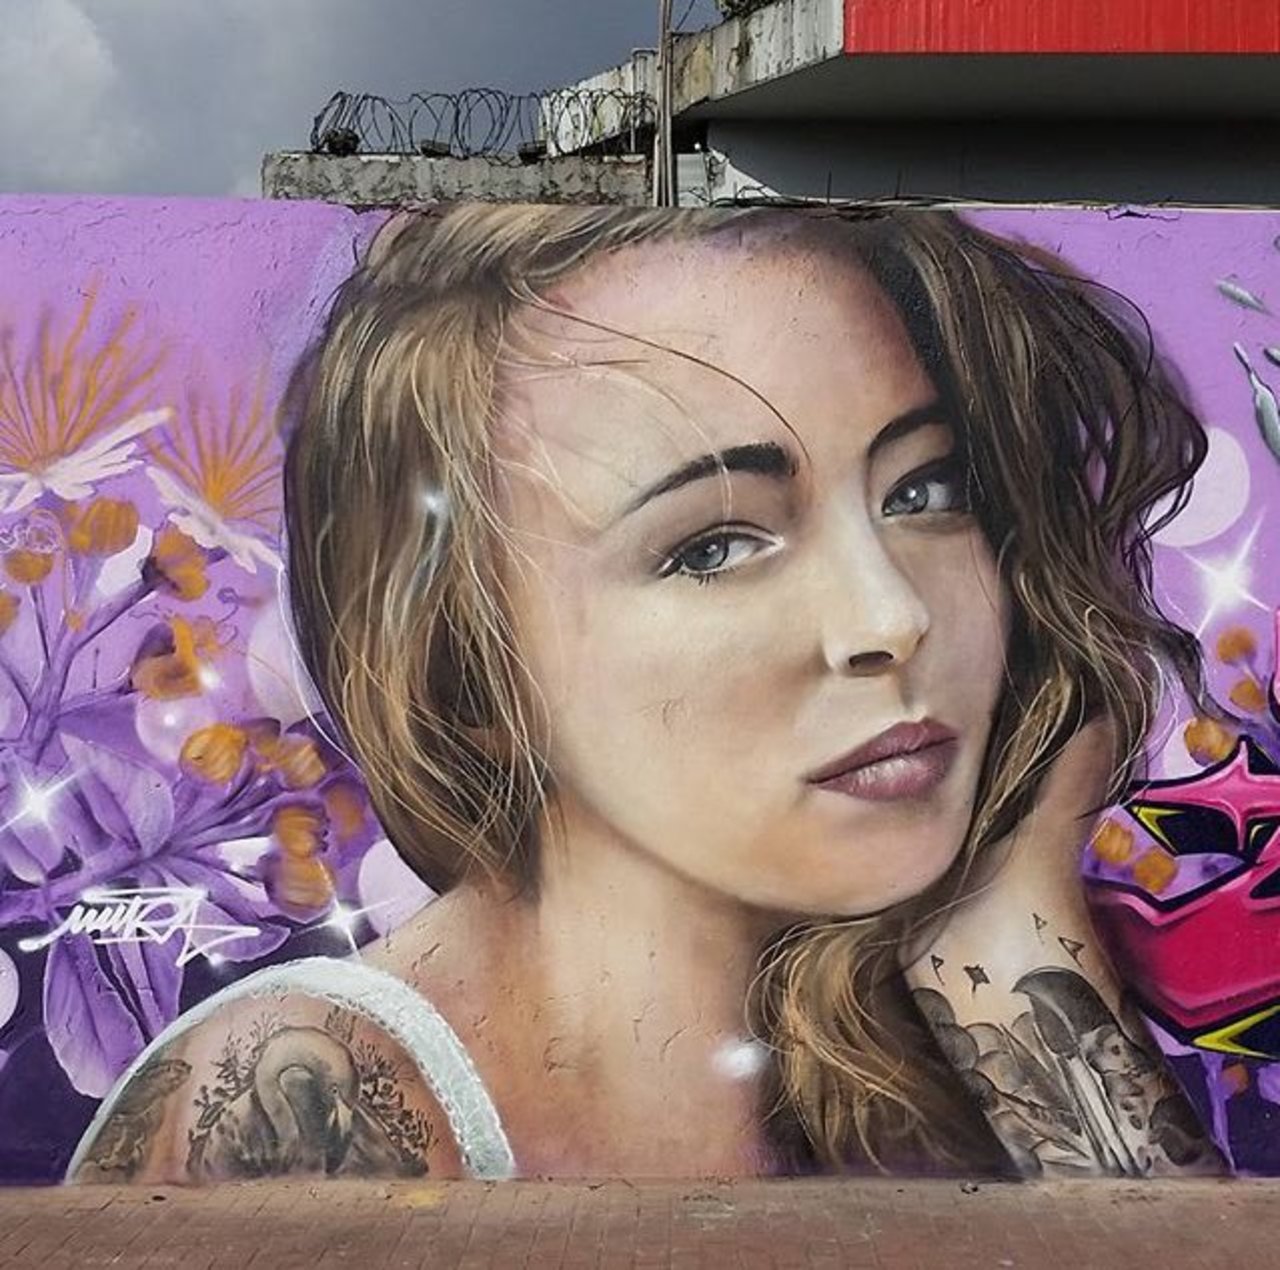 New Street Art by Mantarea 

#art #graffiti #mural #streetart https://t.co/8uZy20bAES